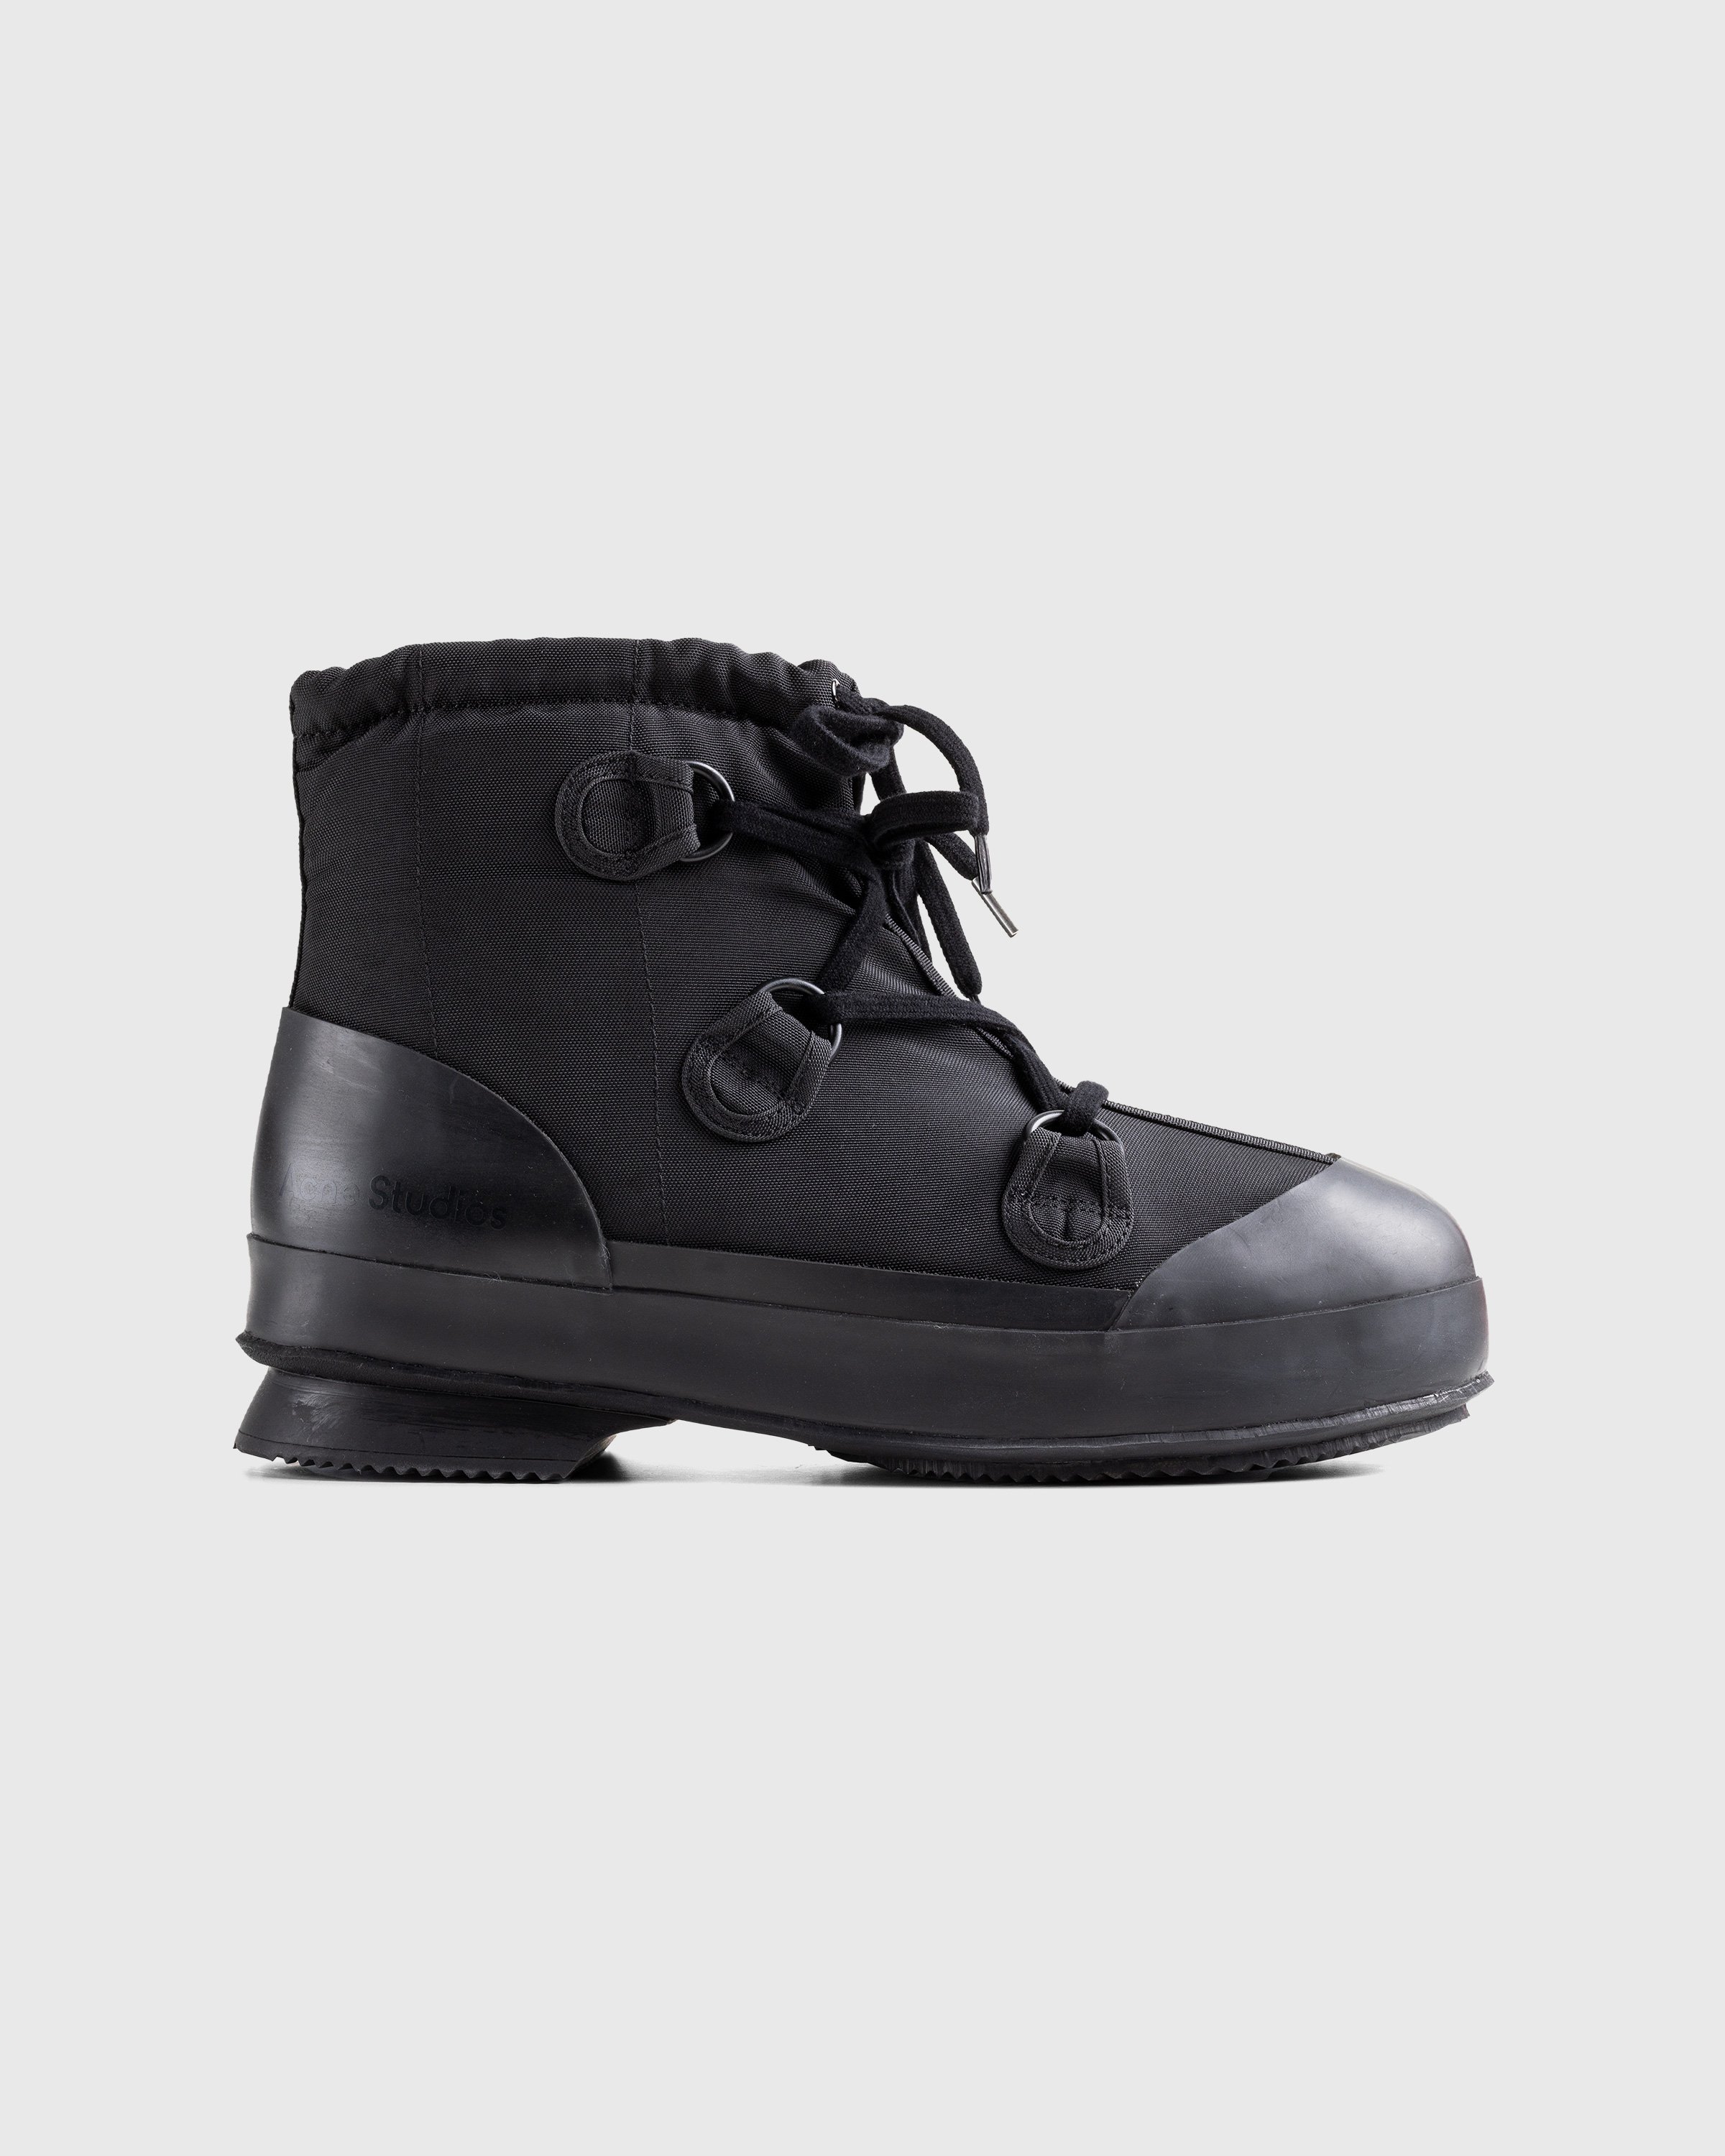 Acne Studios - Lace-Up Boots Black - Footwear - Black - Image 1